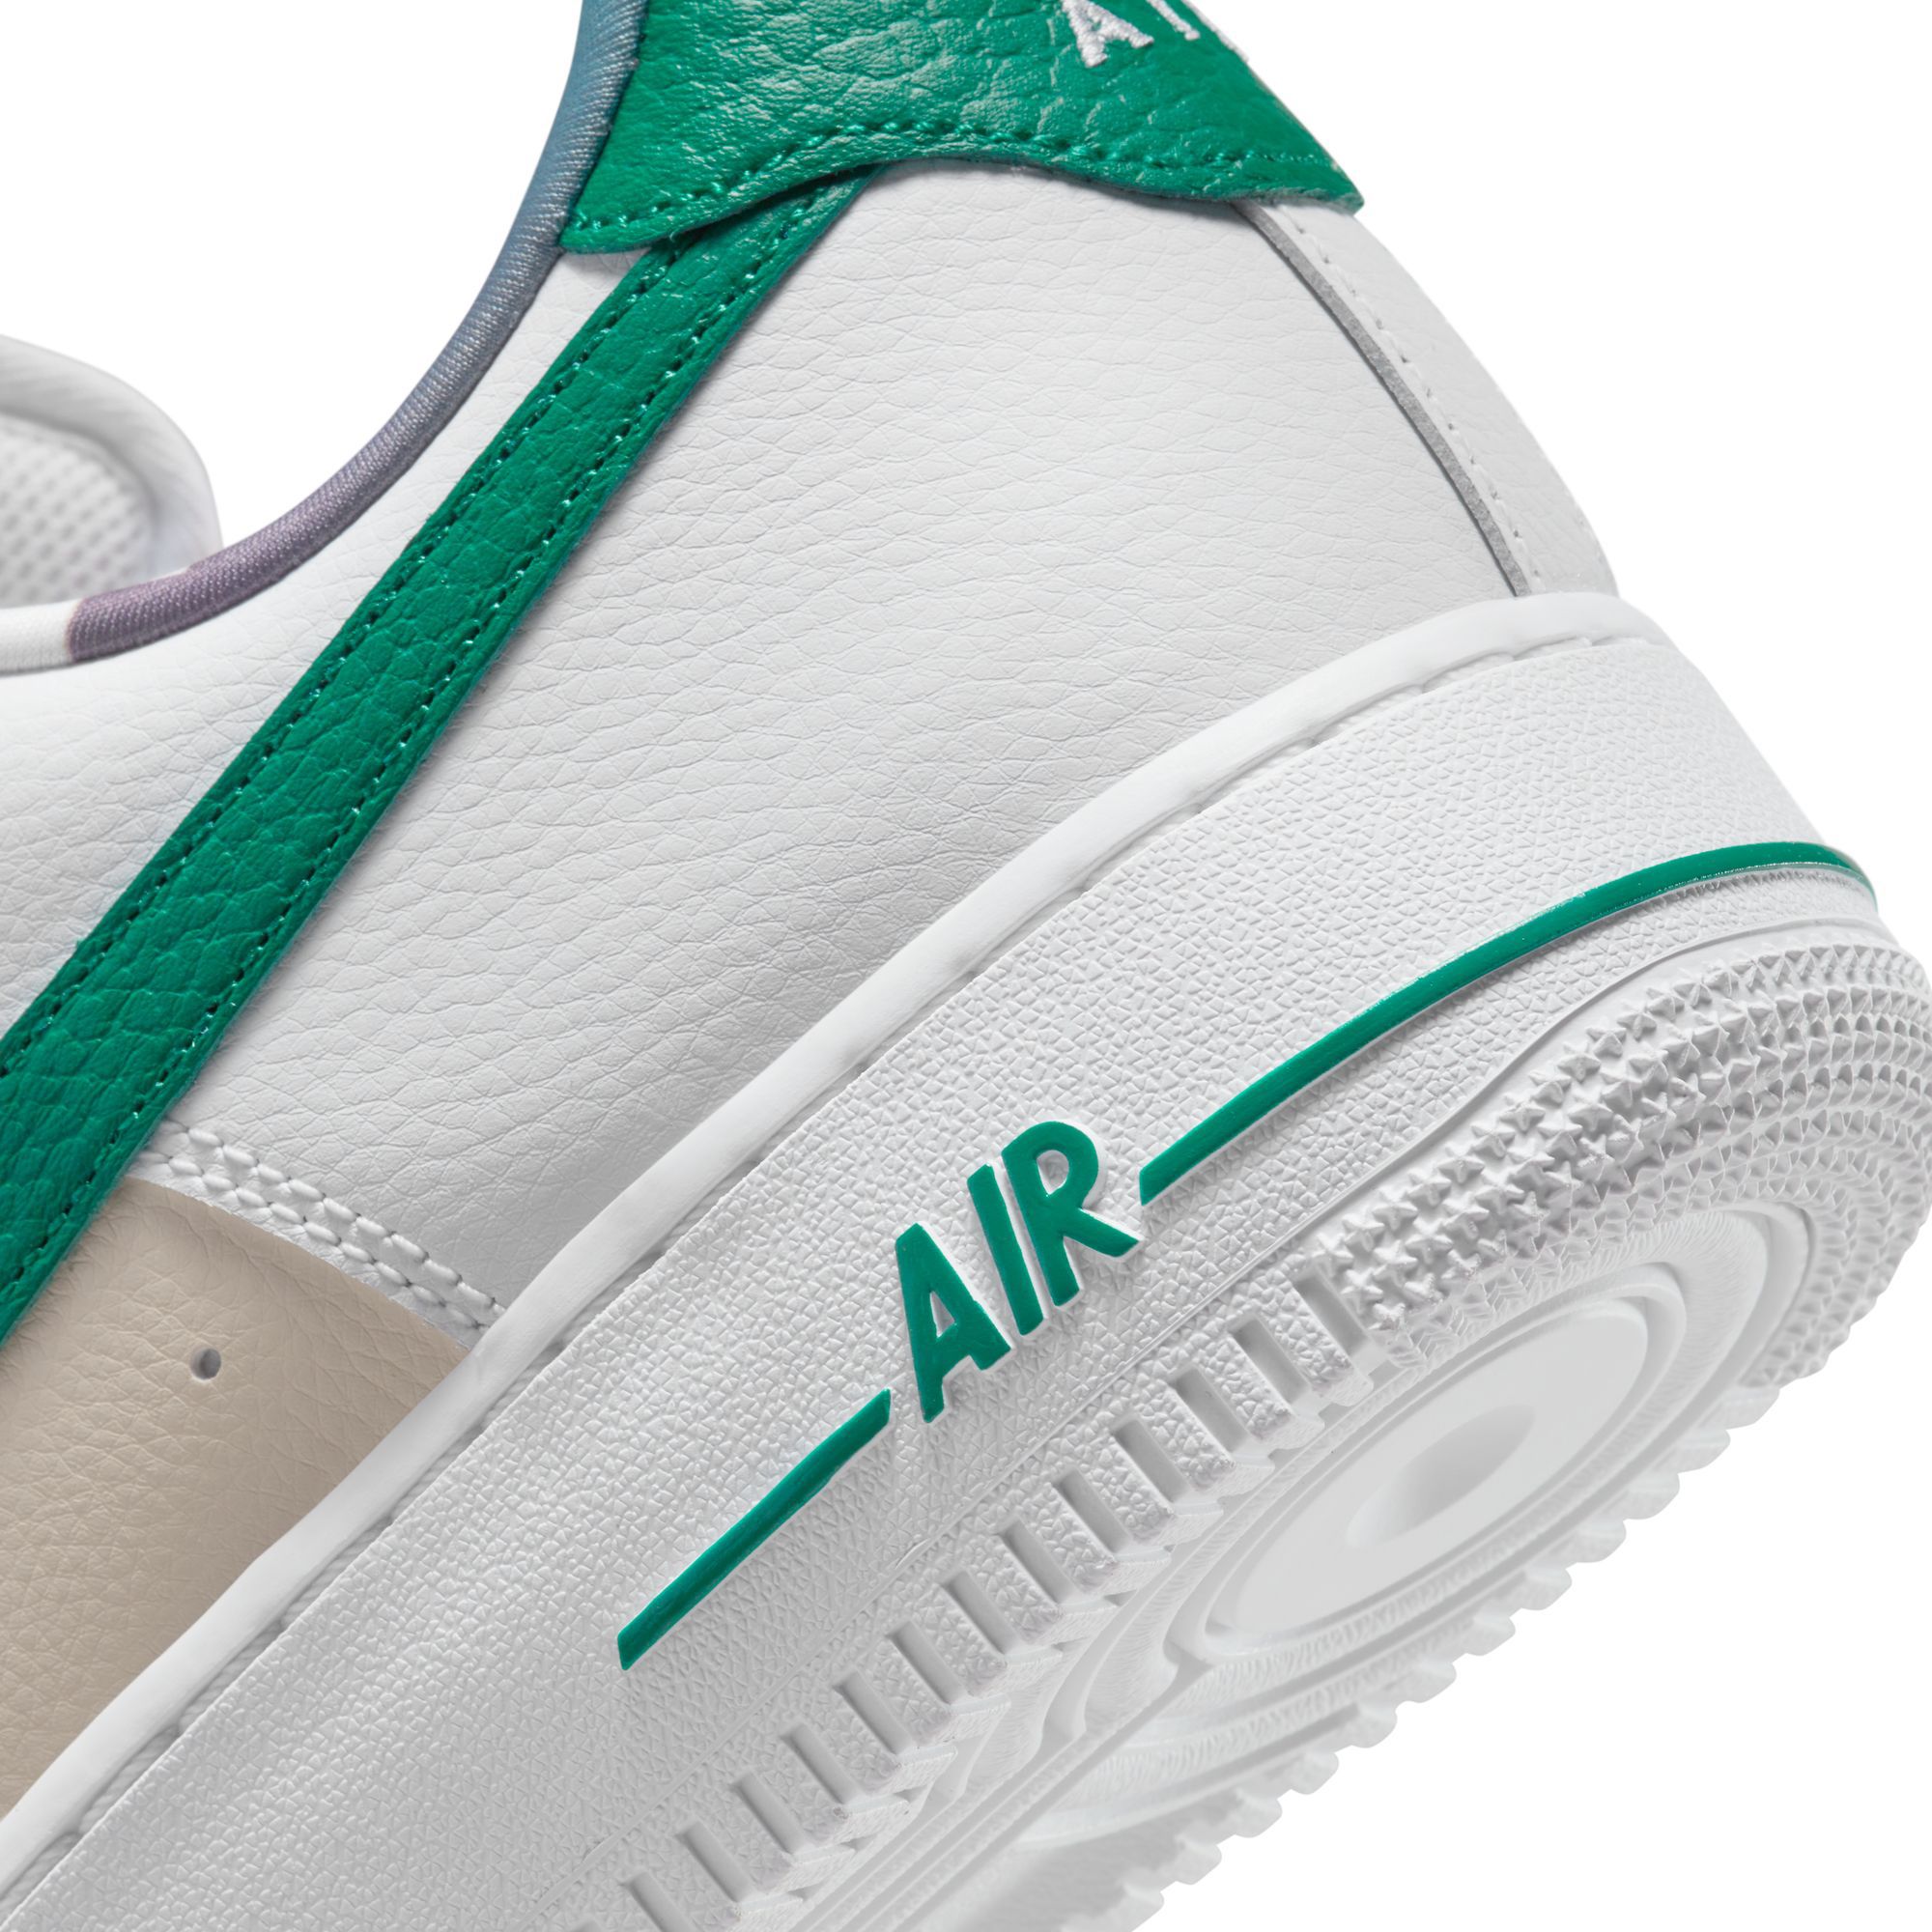 Nike Air Force 1 '07 LV8 EMB White Malachite sneakers